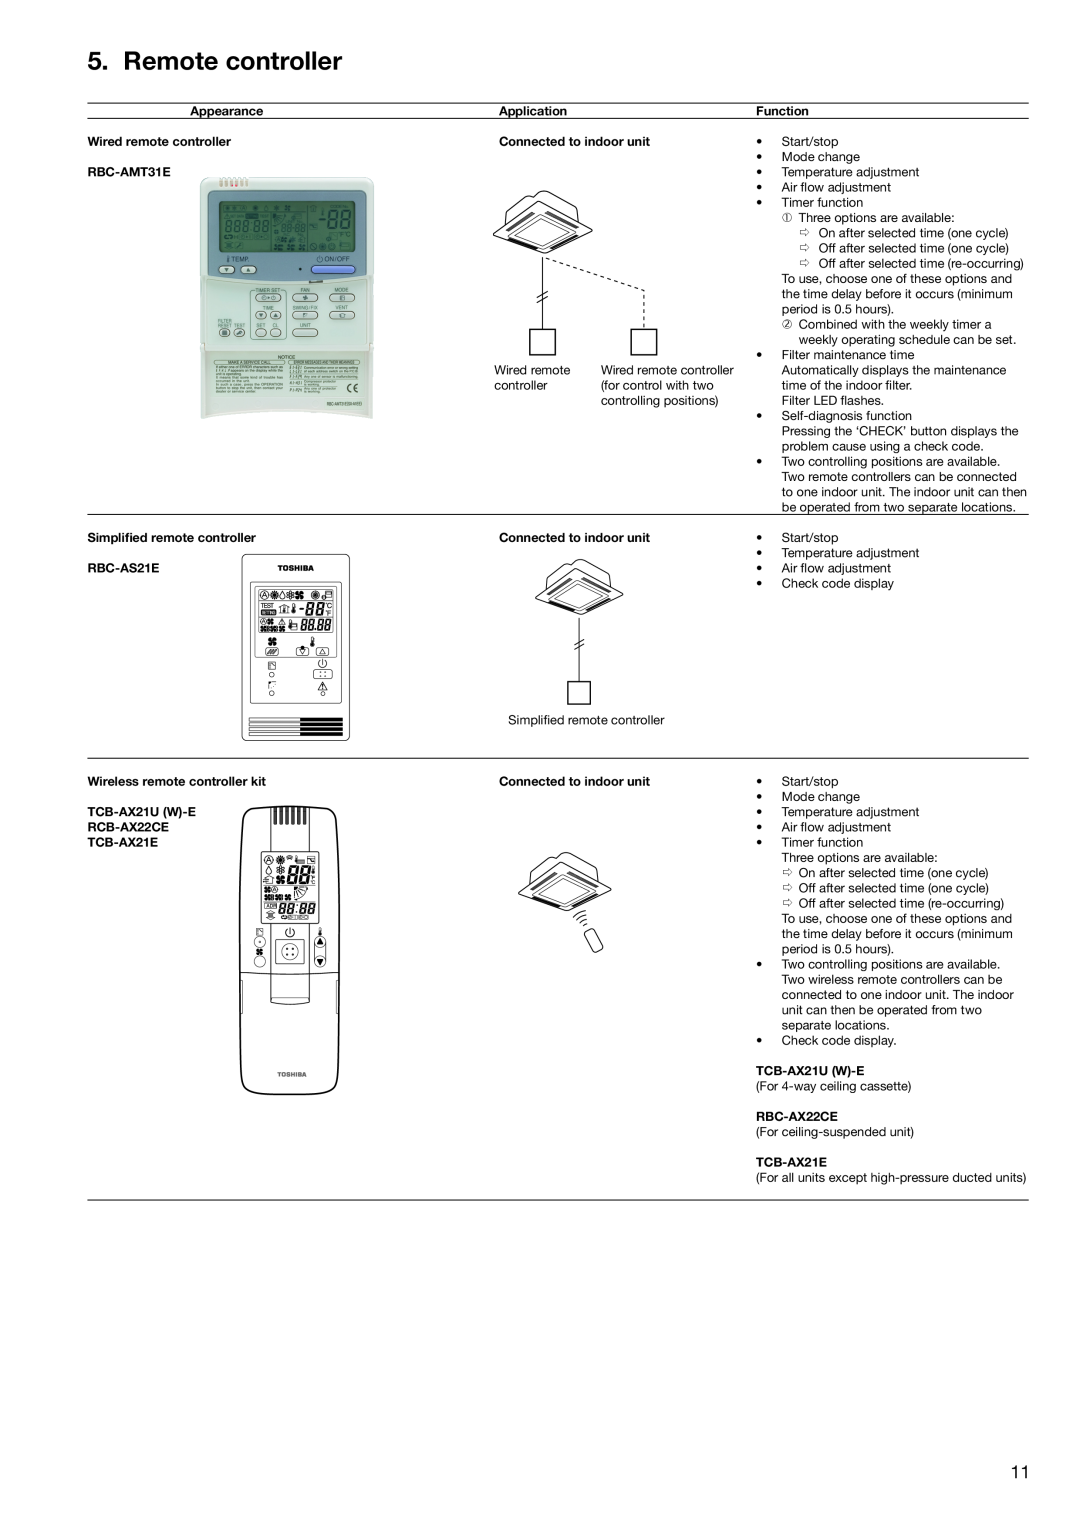 Toshiba HFC R-410A manual Remote controller 